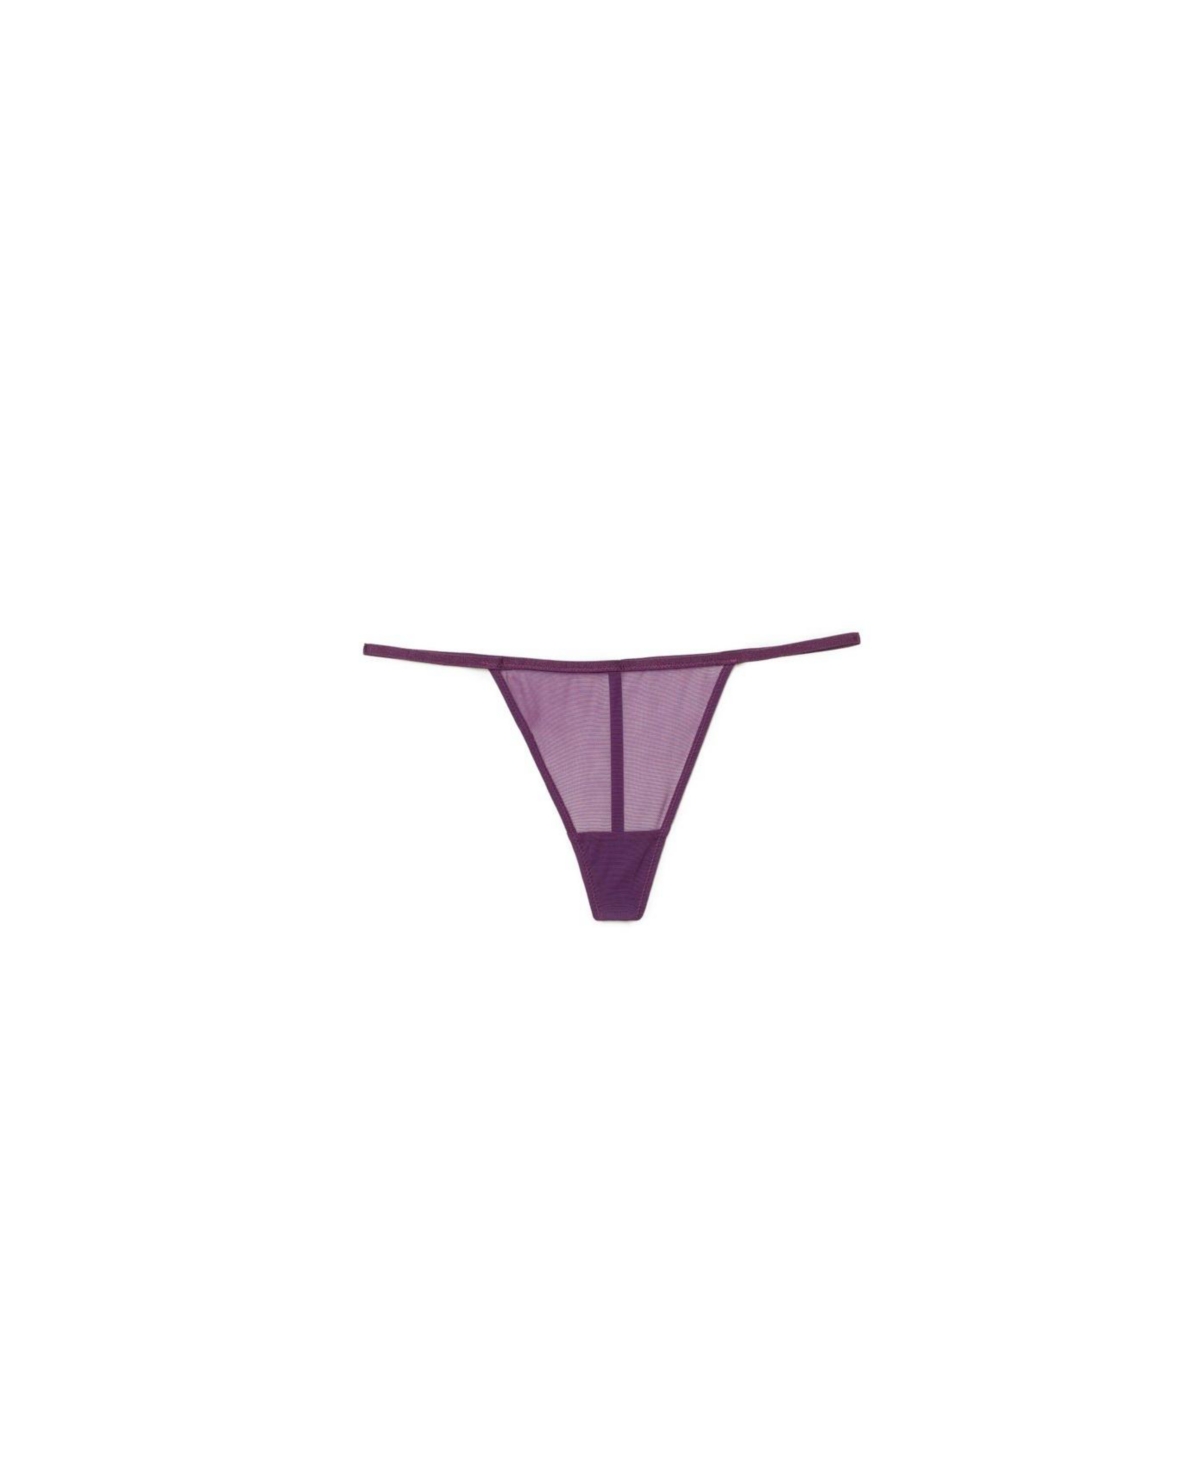 Shelly Women's G-String Panty - Dark purple